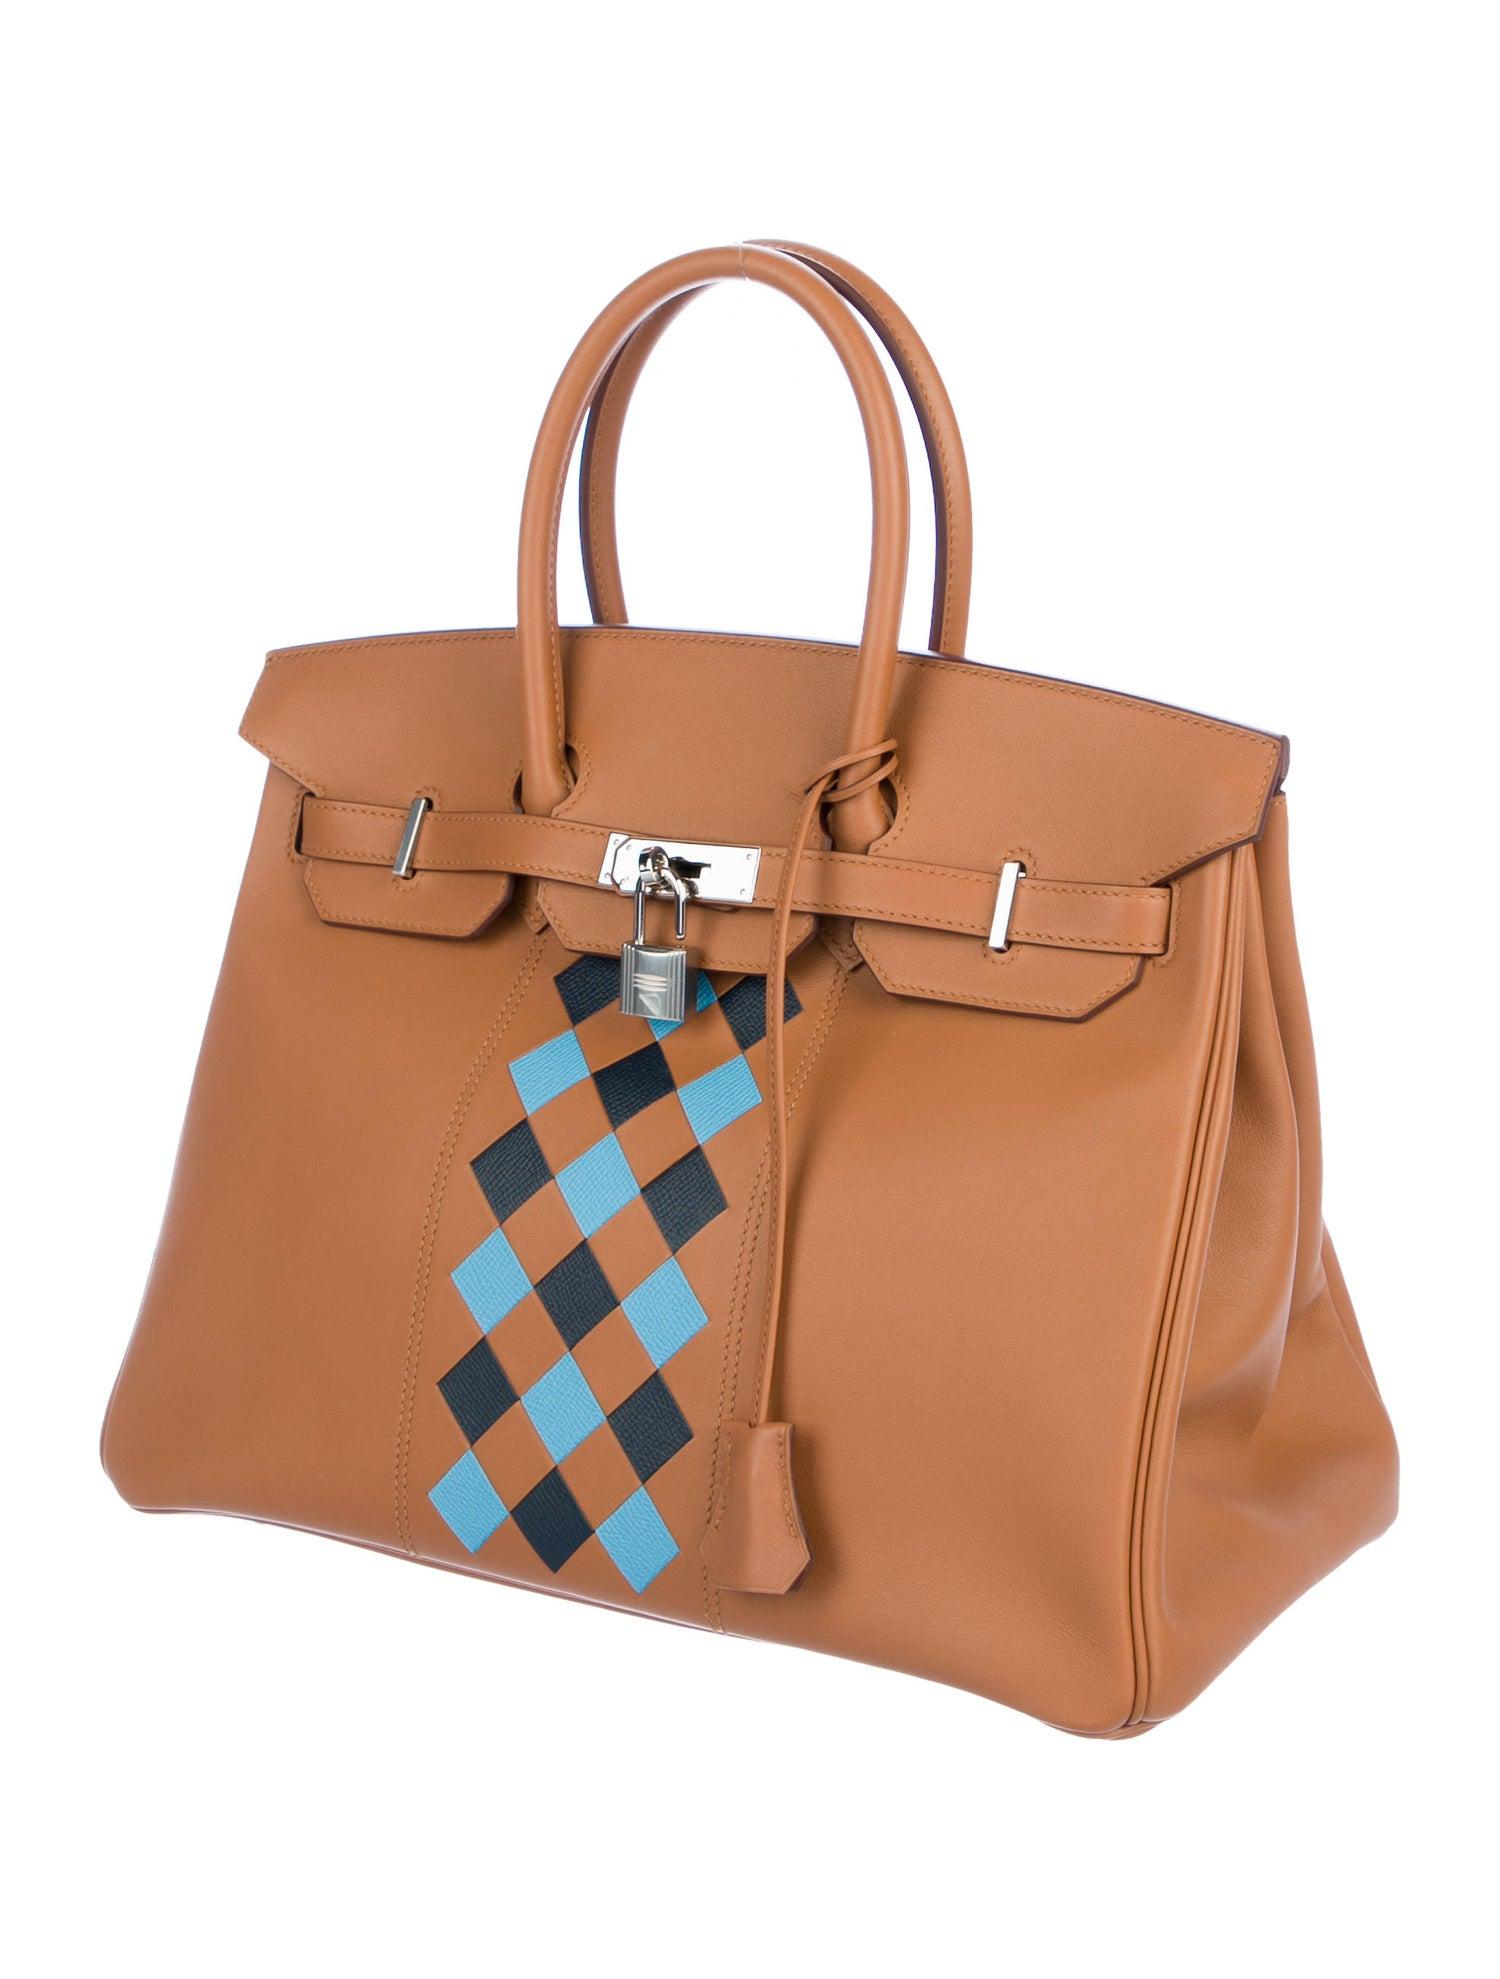 Hermes NEW Birkin 35 Cognac Checker Leather Top Handle Satchel Tote Bag in Box  (Orange)